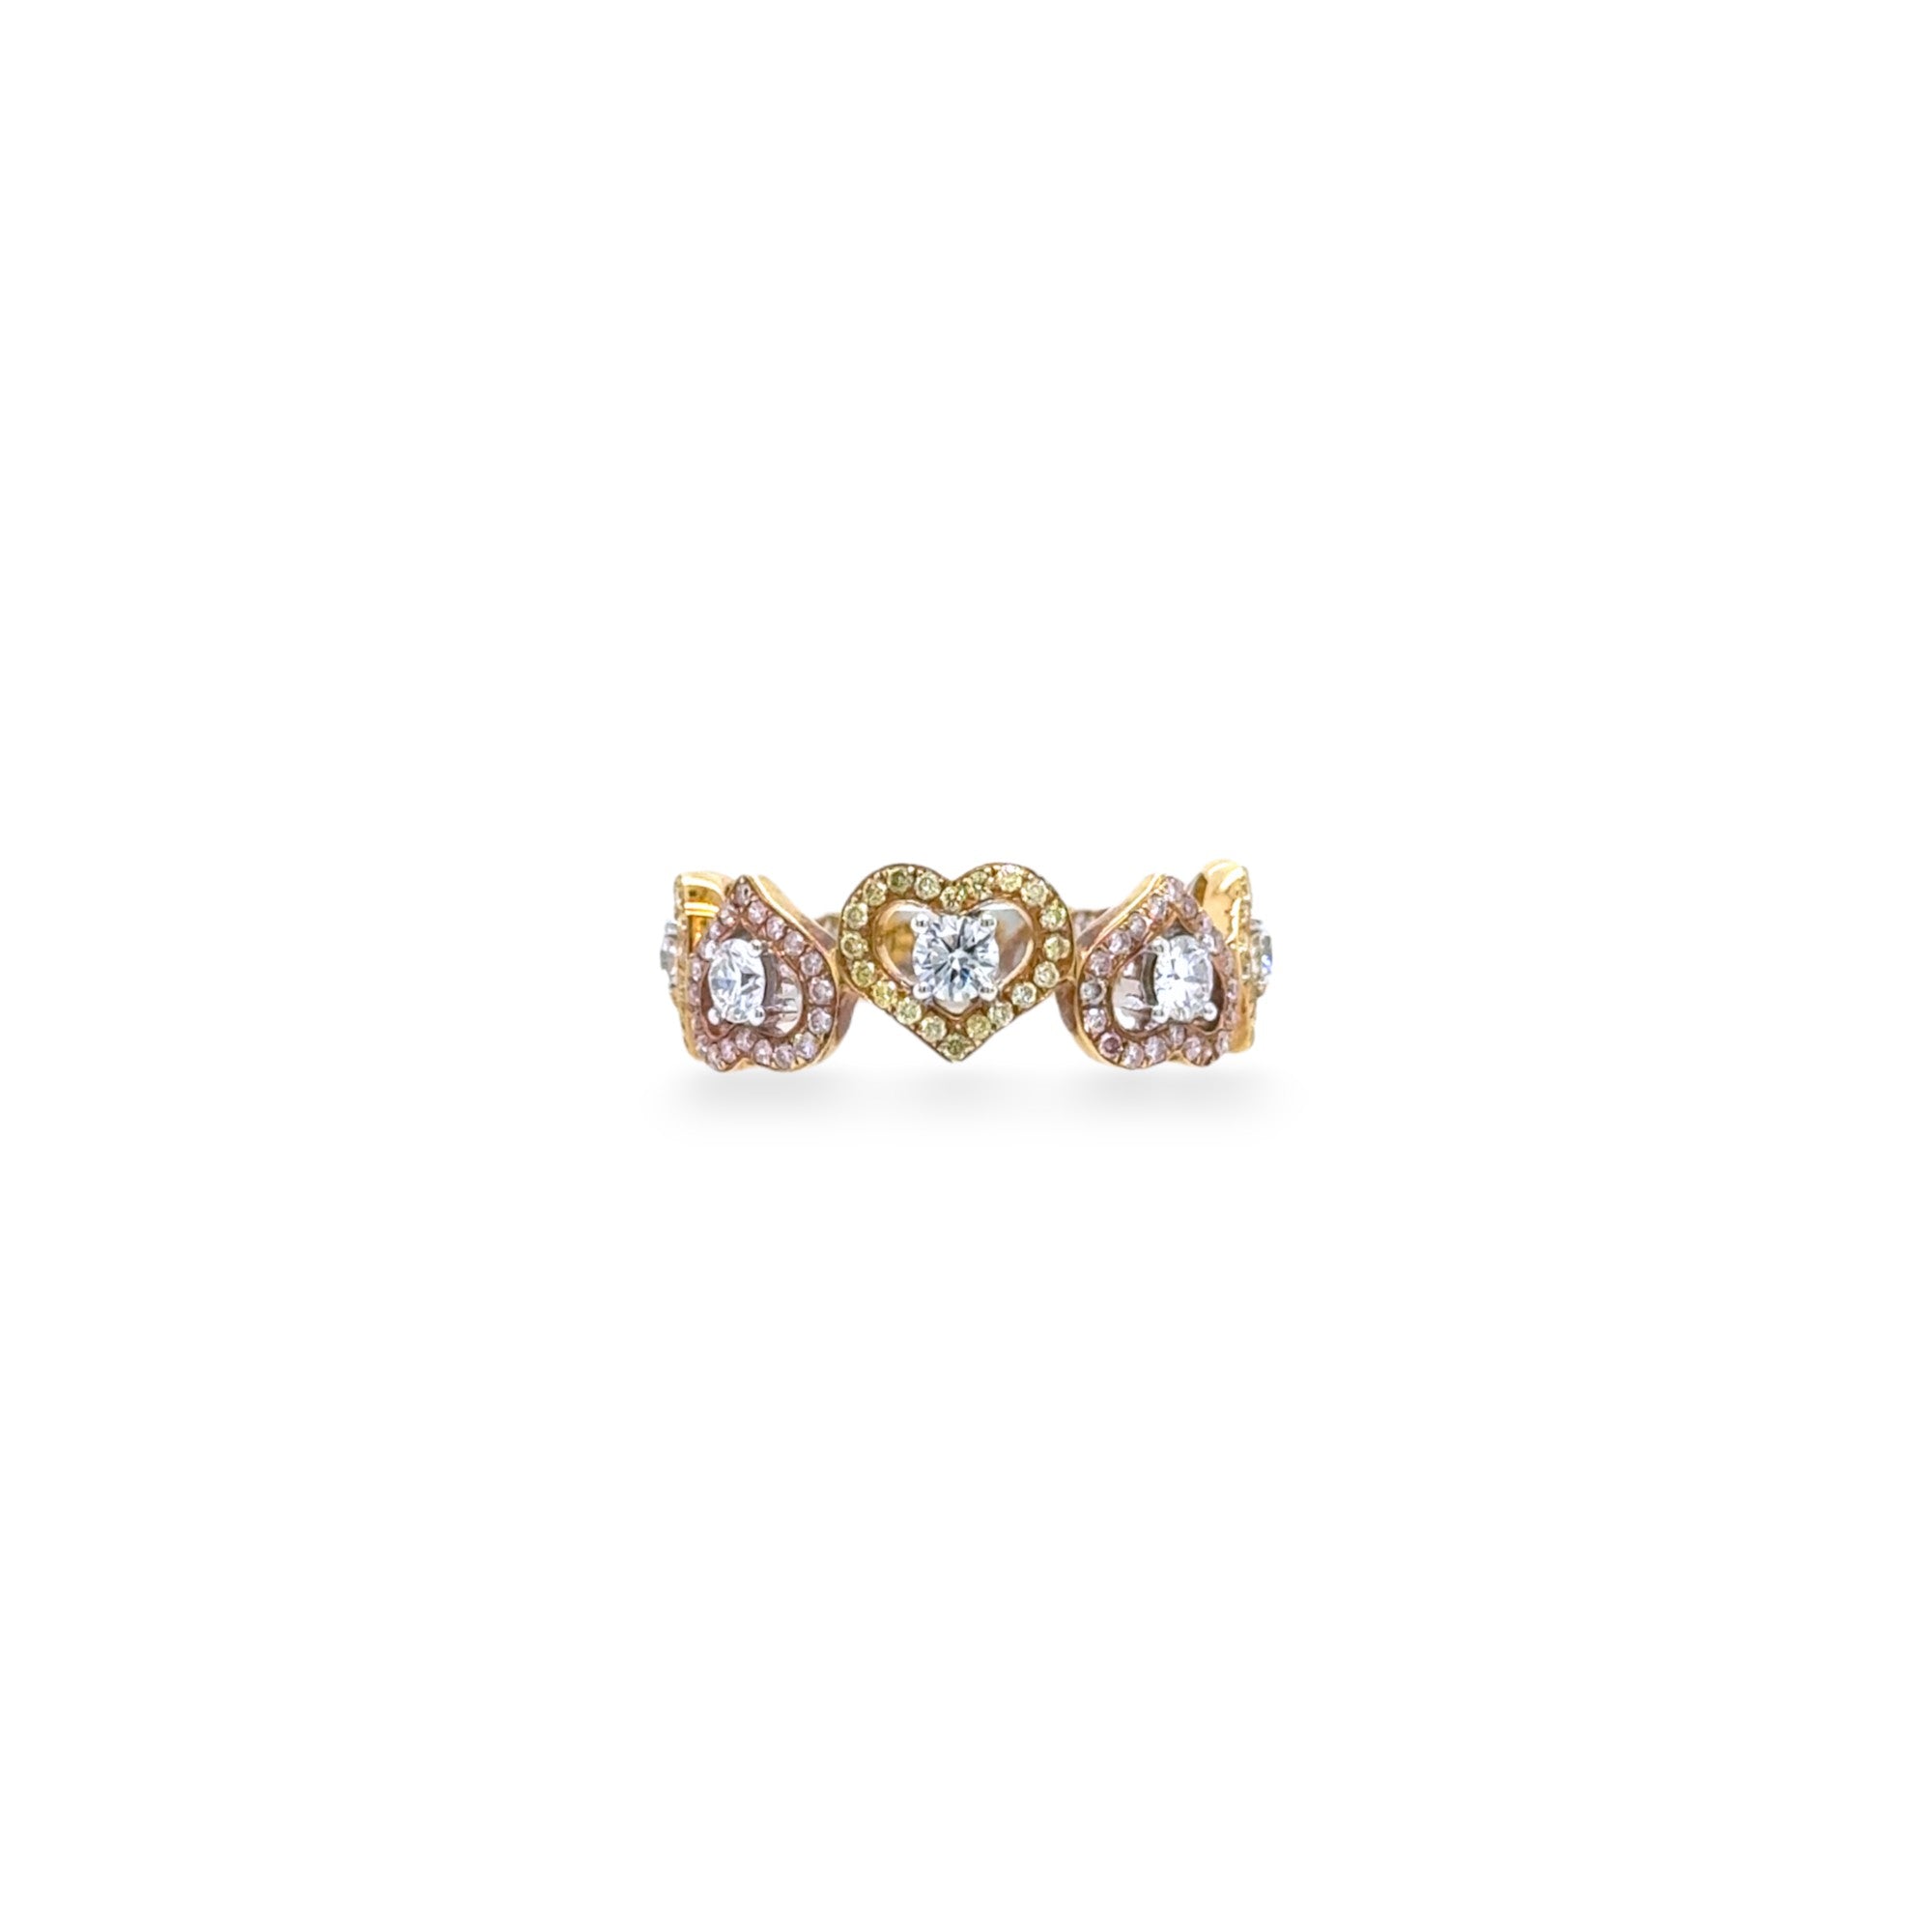 White, Pink & Yellow Diamond Ring